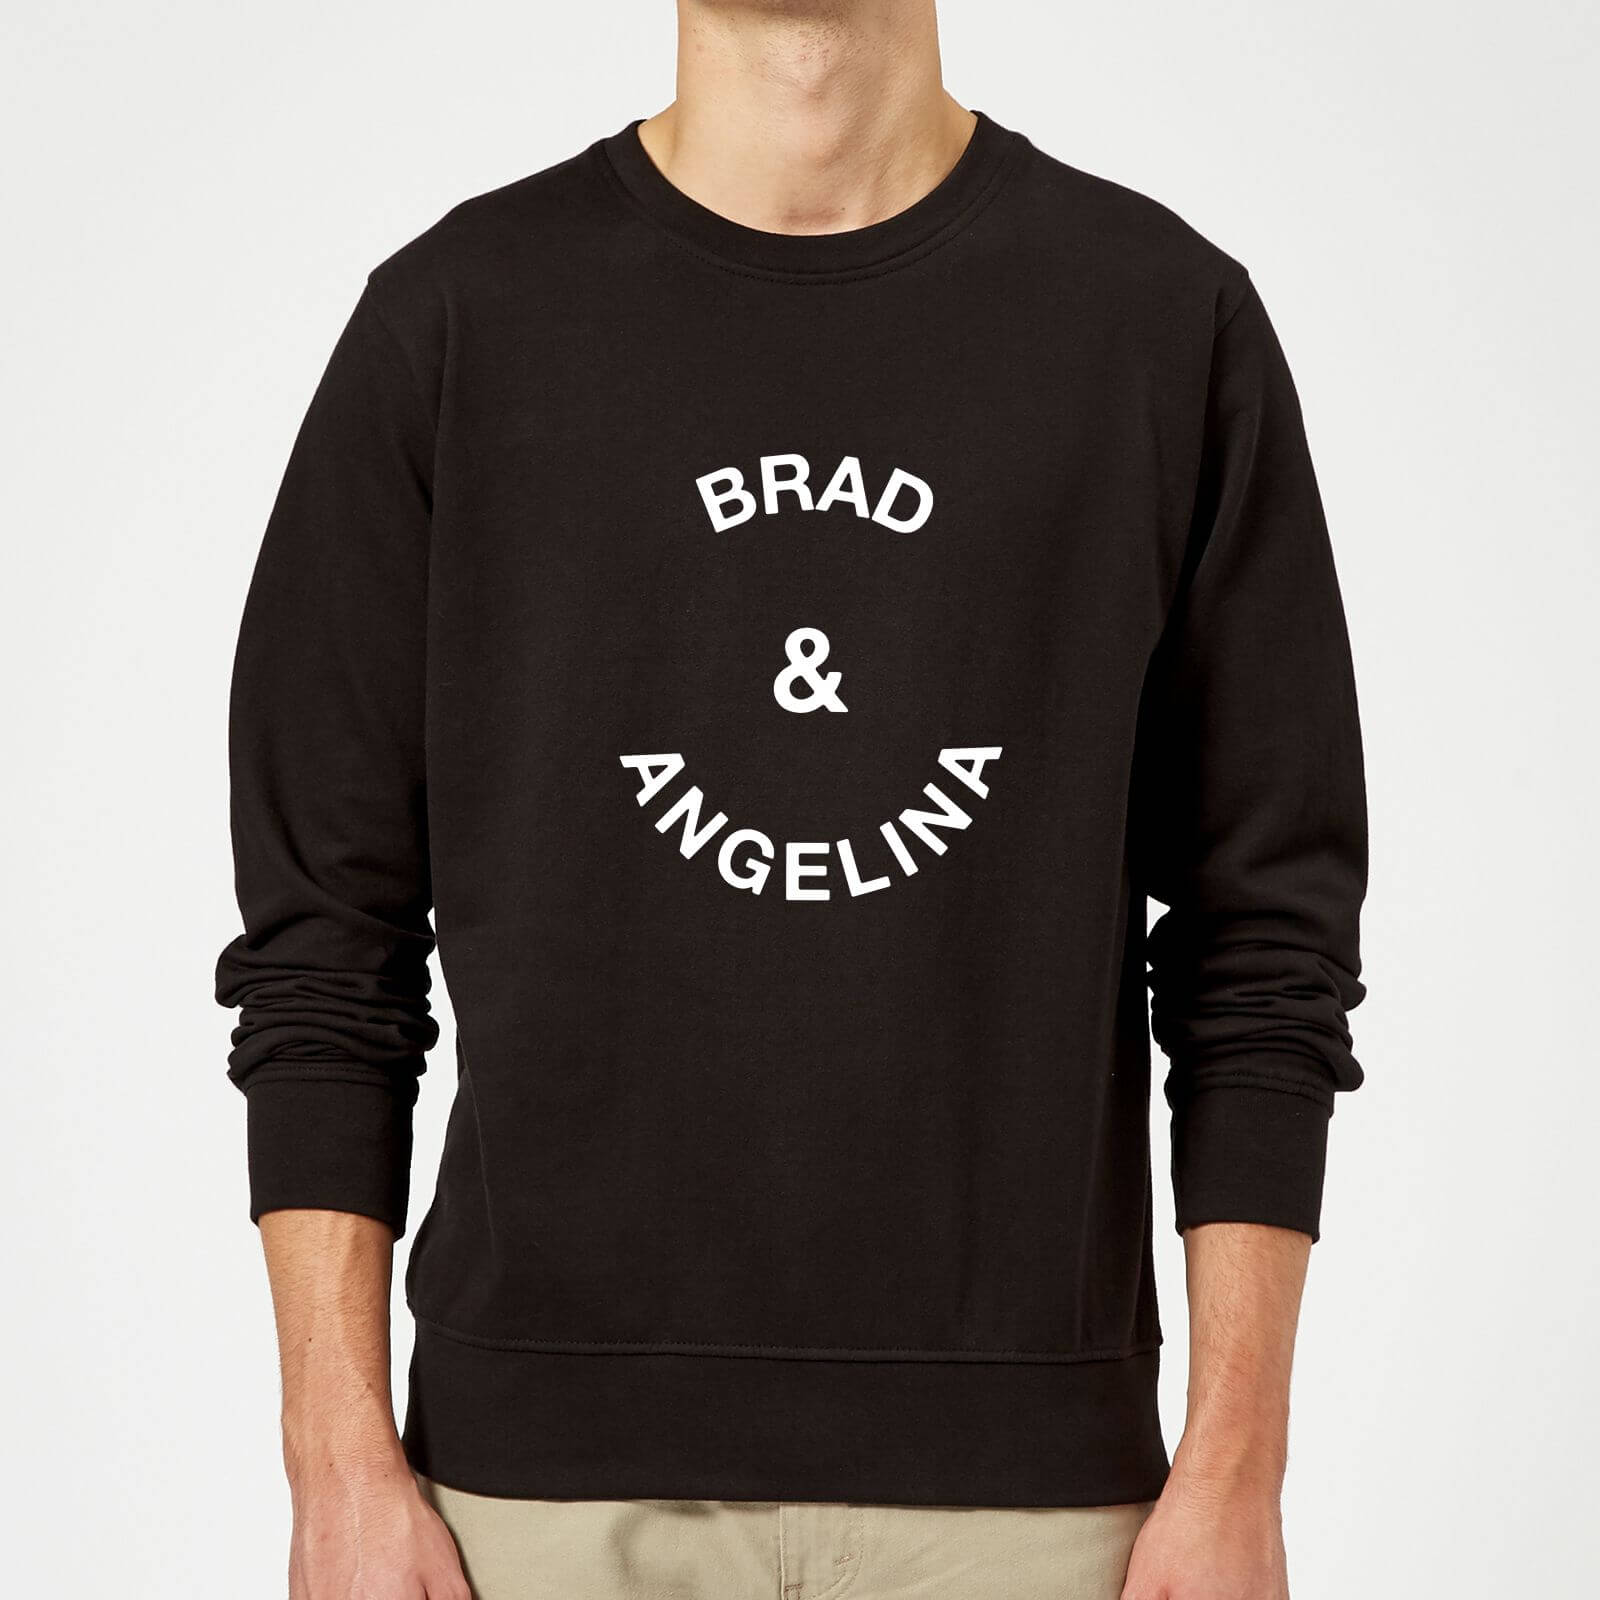 Brad & Angelina Sweatshirt - Black - XXL